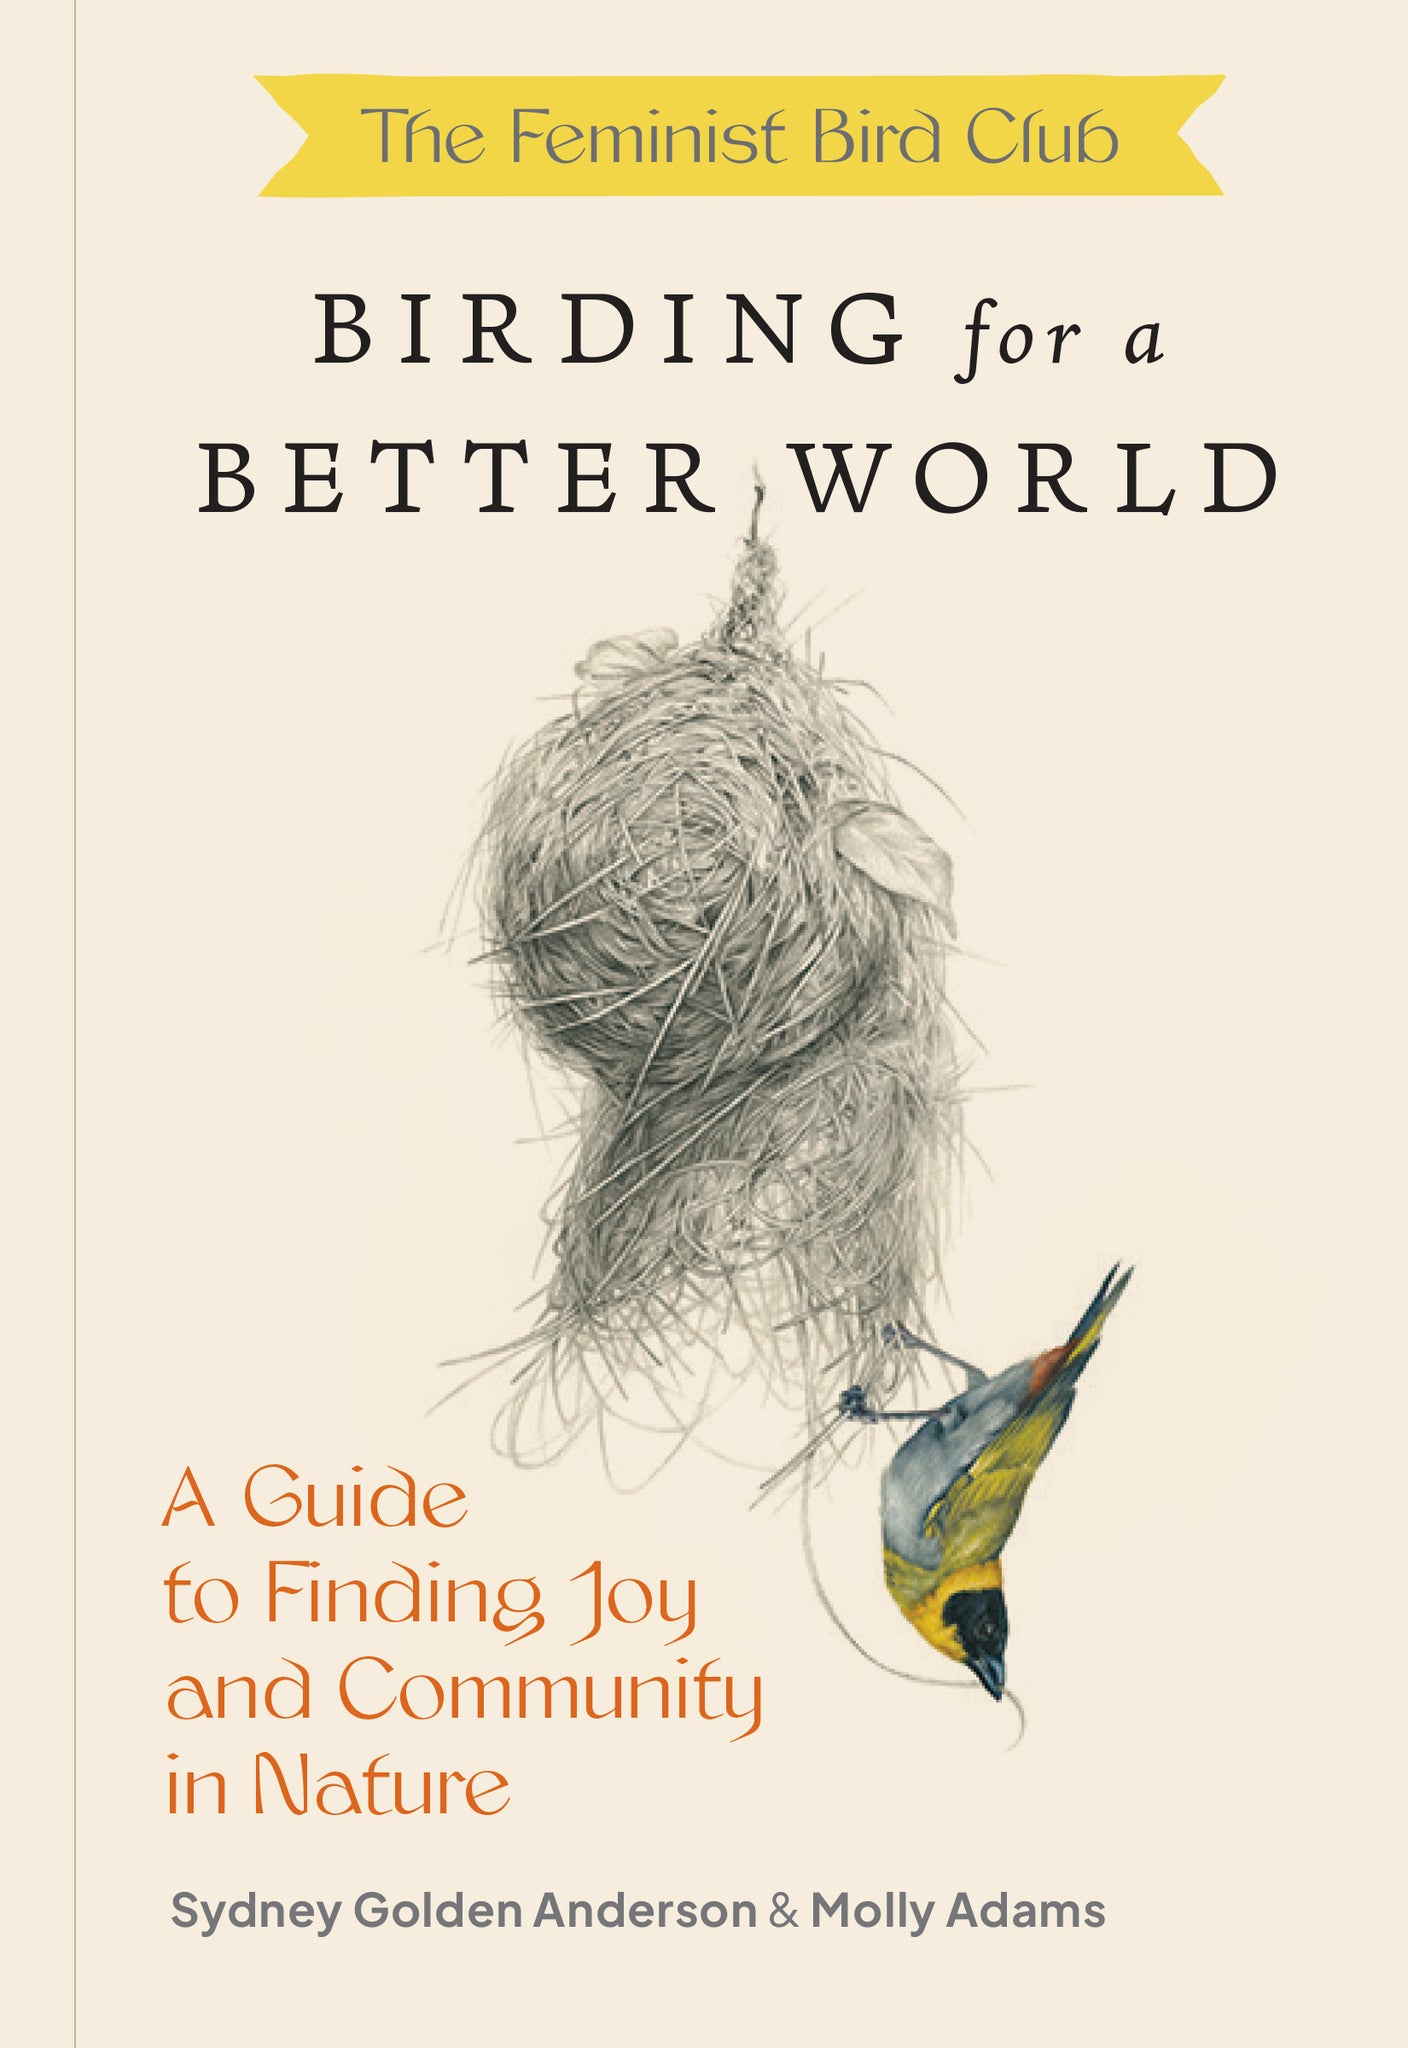 Feminist Bird Club’s Birding for a Better World, the cover